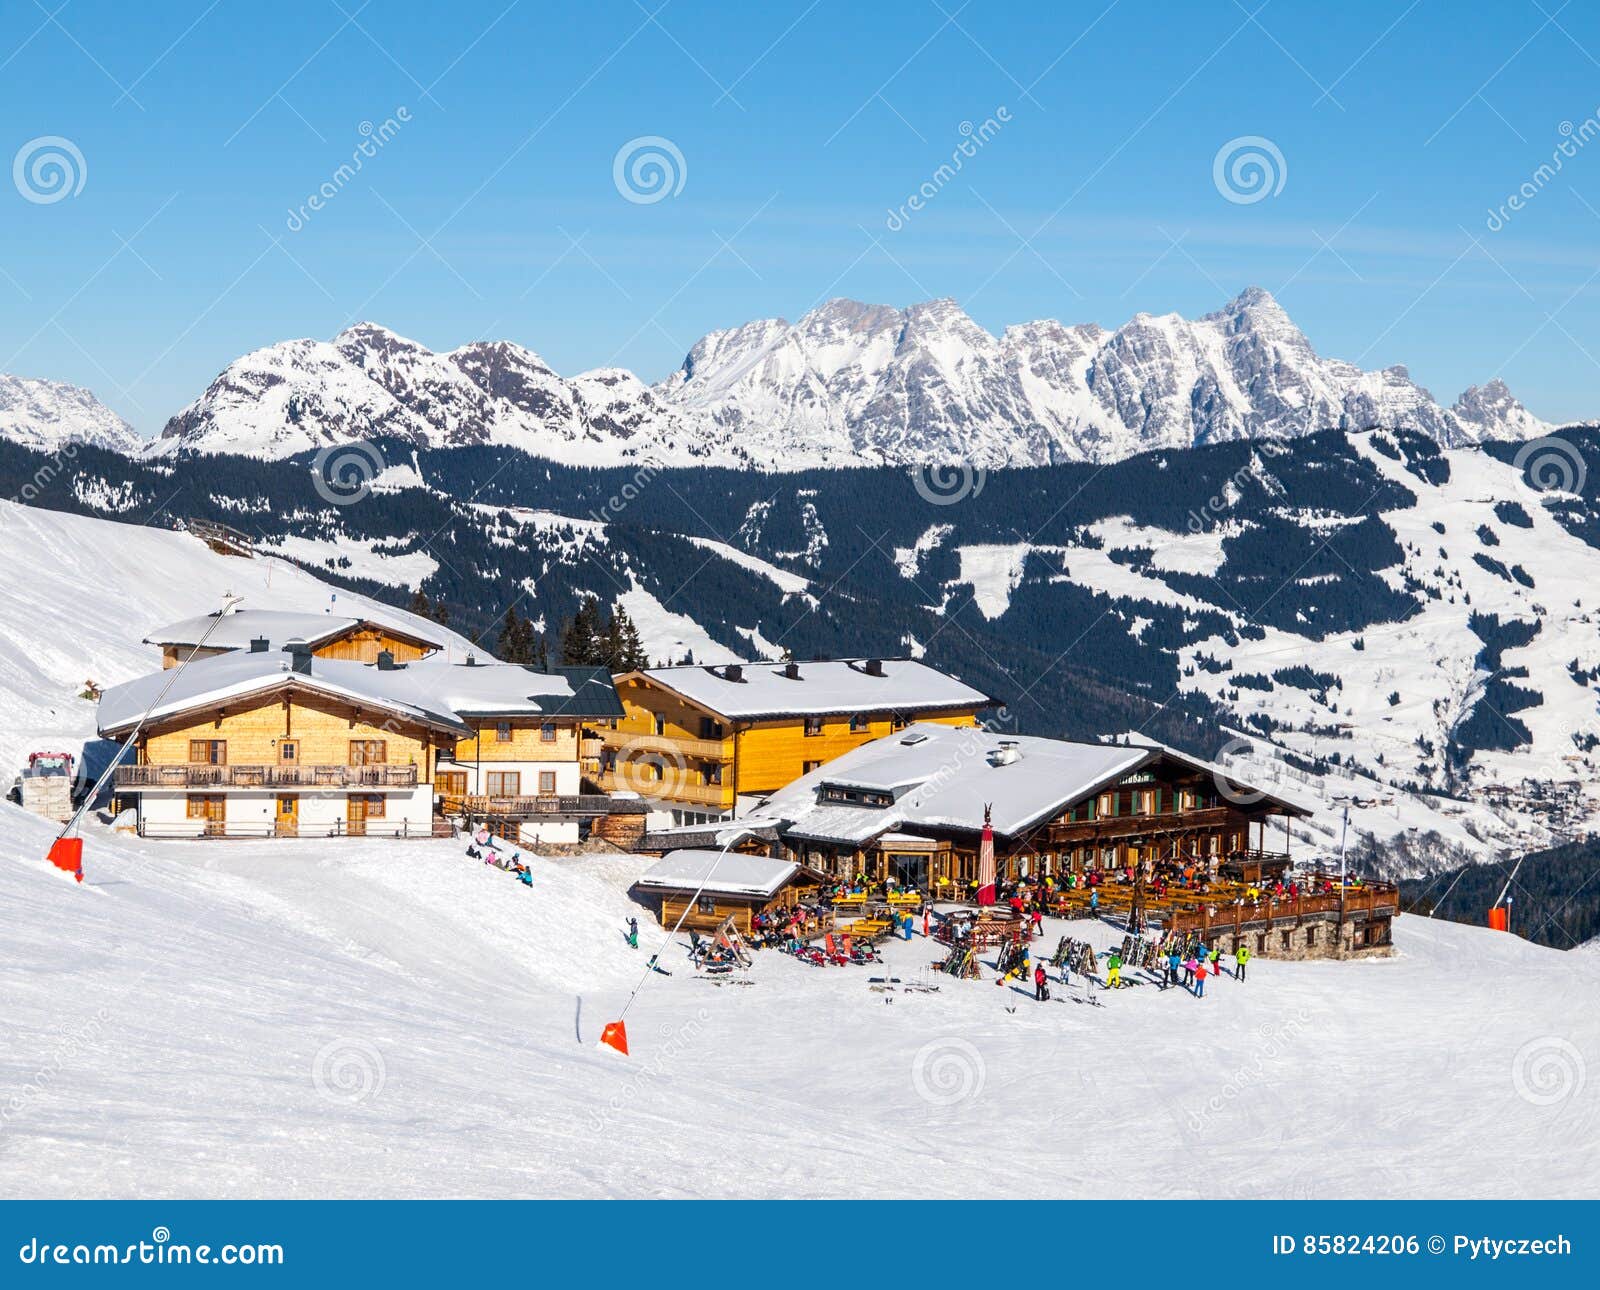 downhill slope and apres ski mountain hut with restaurant terrace in saalbach hinterglemm leogang winter resort, tirol